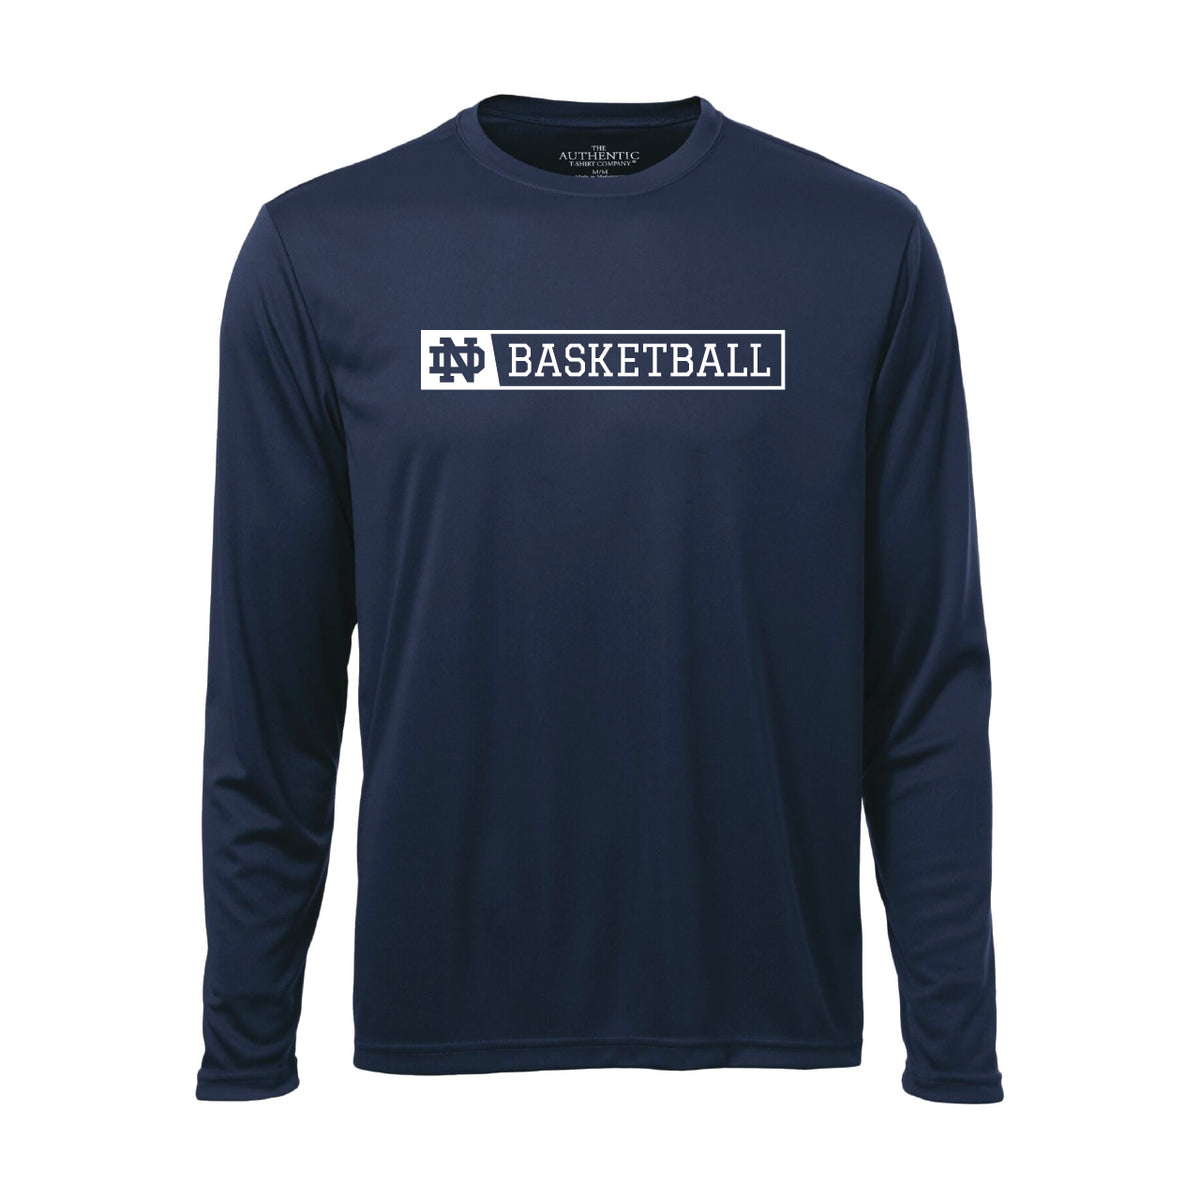 ND Basketball ATC™ Long Sleeve Performance Shirt